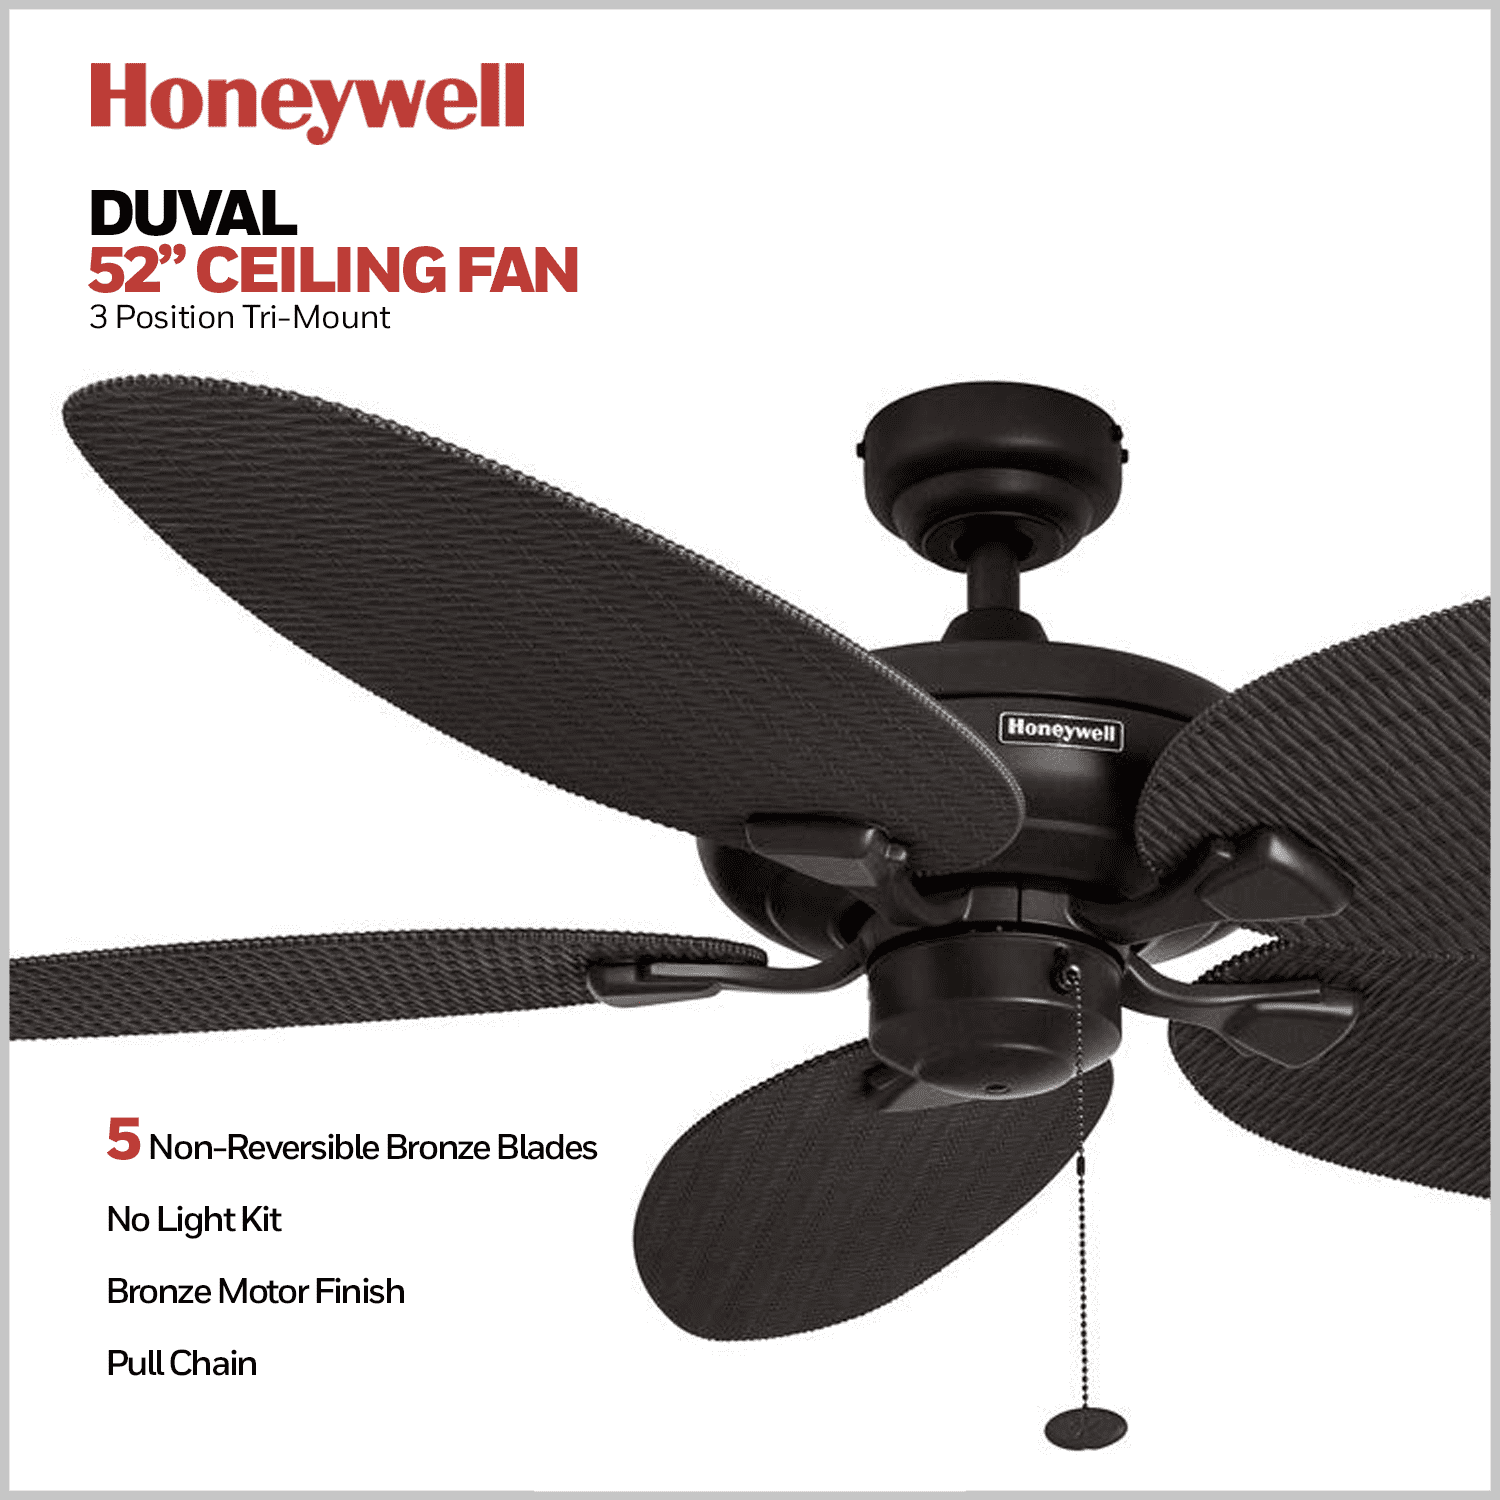 Honeywell Duvall Ceiling Fan 50201 52 Inch Bronze Finish 